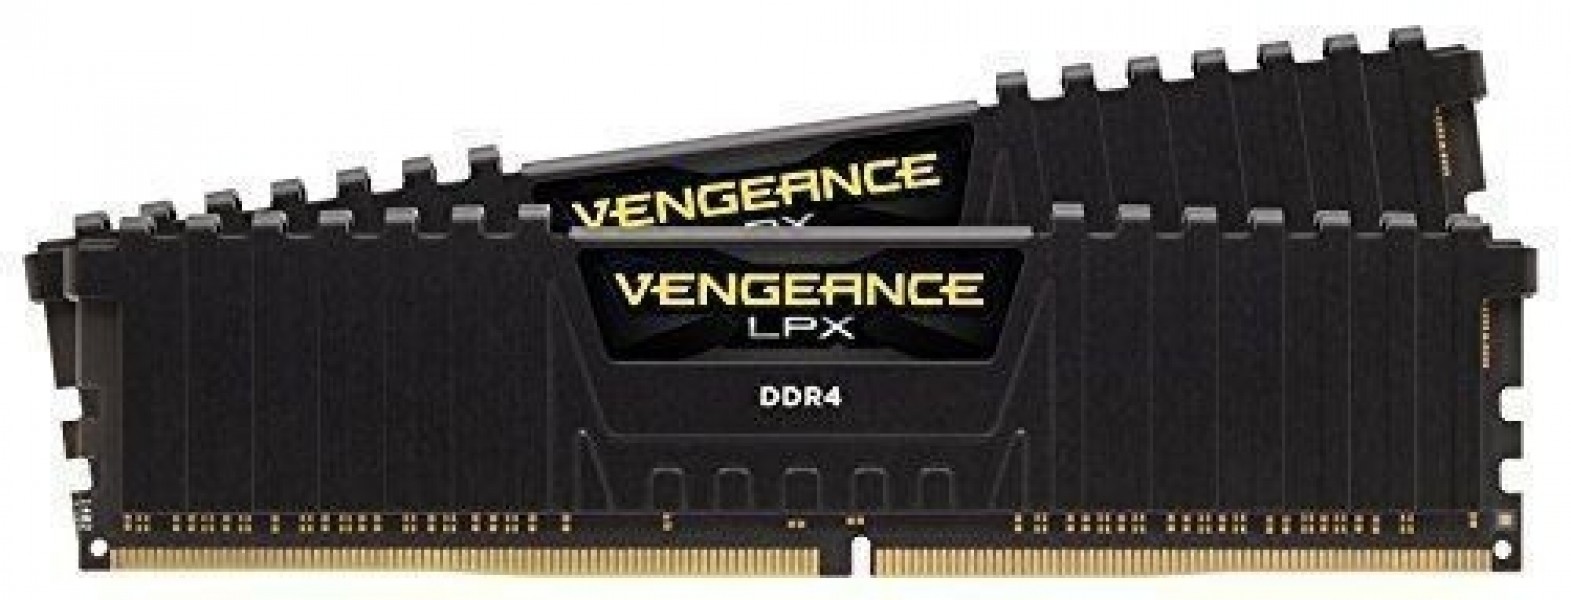 Corsair Vengeance LPX 16GB 2666MHz DDR4 CL16 KIT OF 2 CMK16GX4M2A2666C16